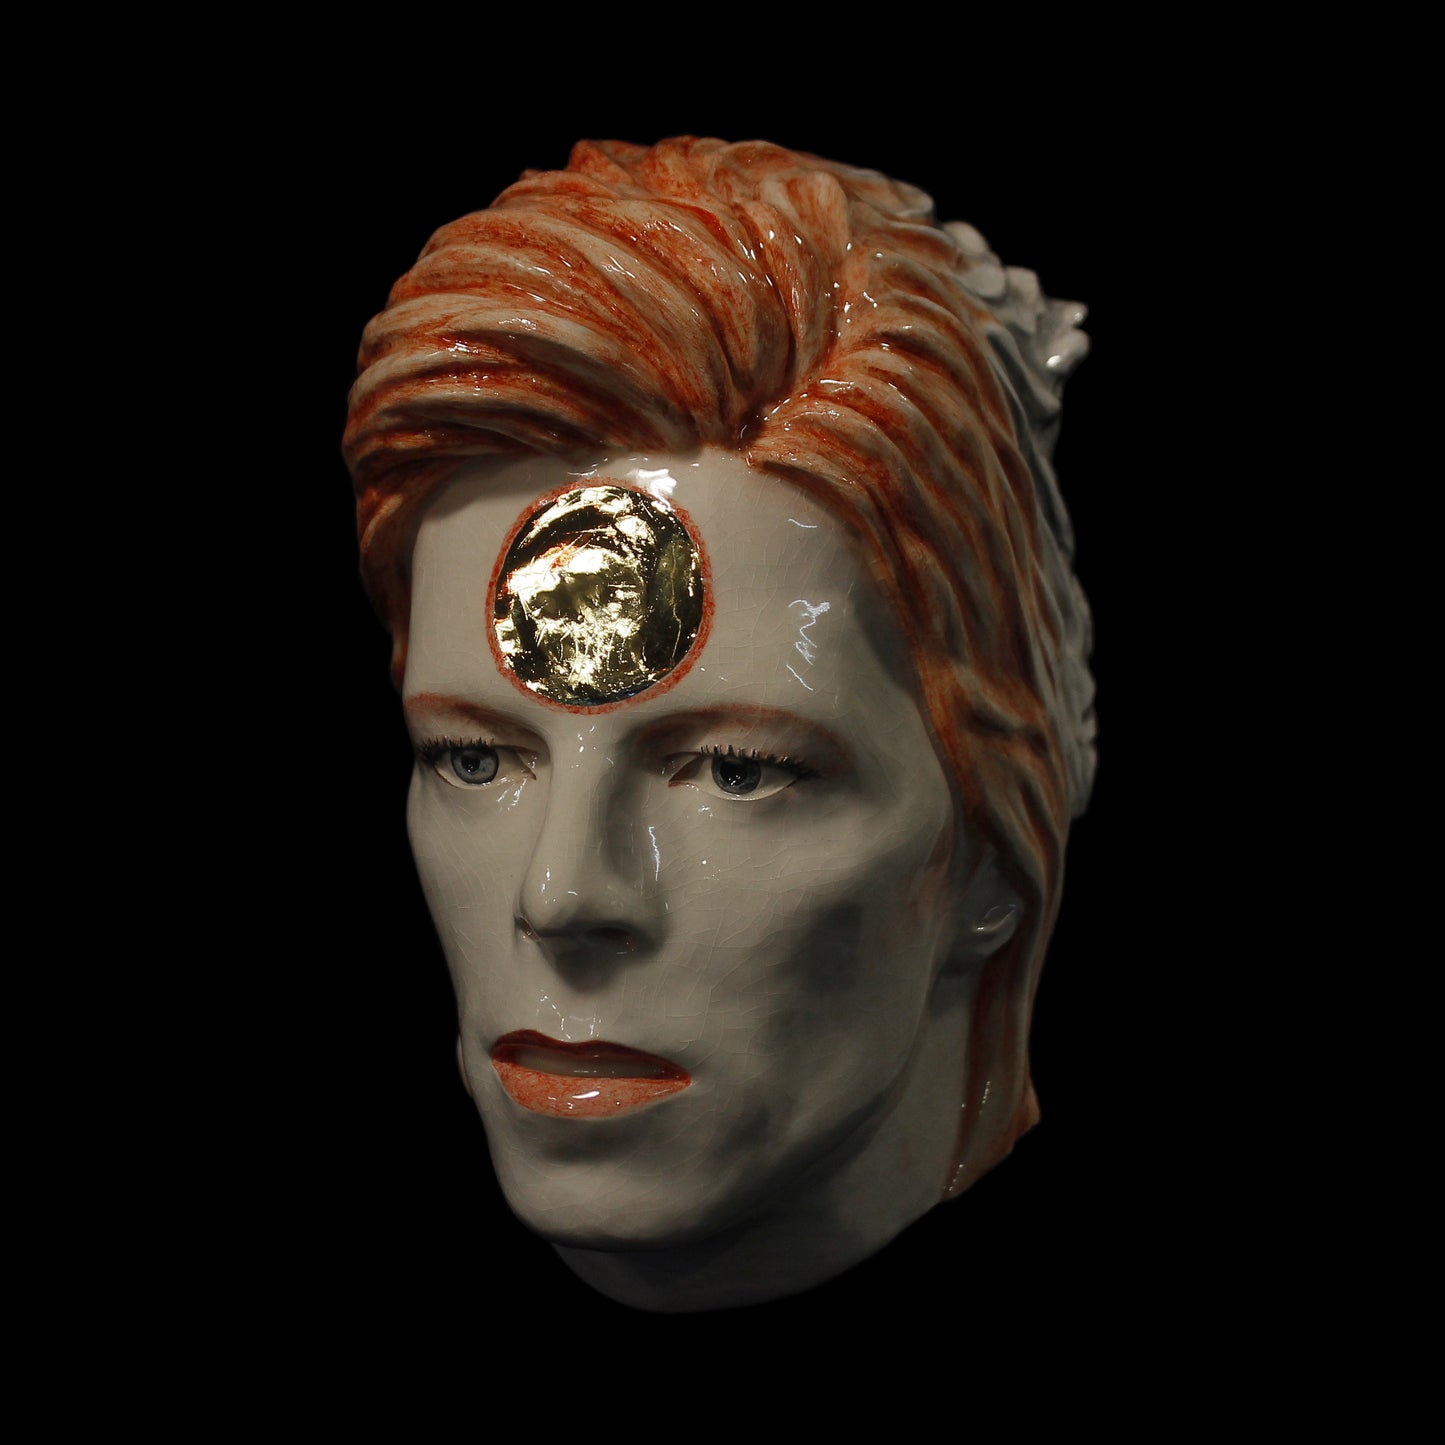 David Bowie - Ziggy Stardust and The Blind Prophet Double Head Sculpture